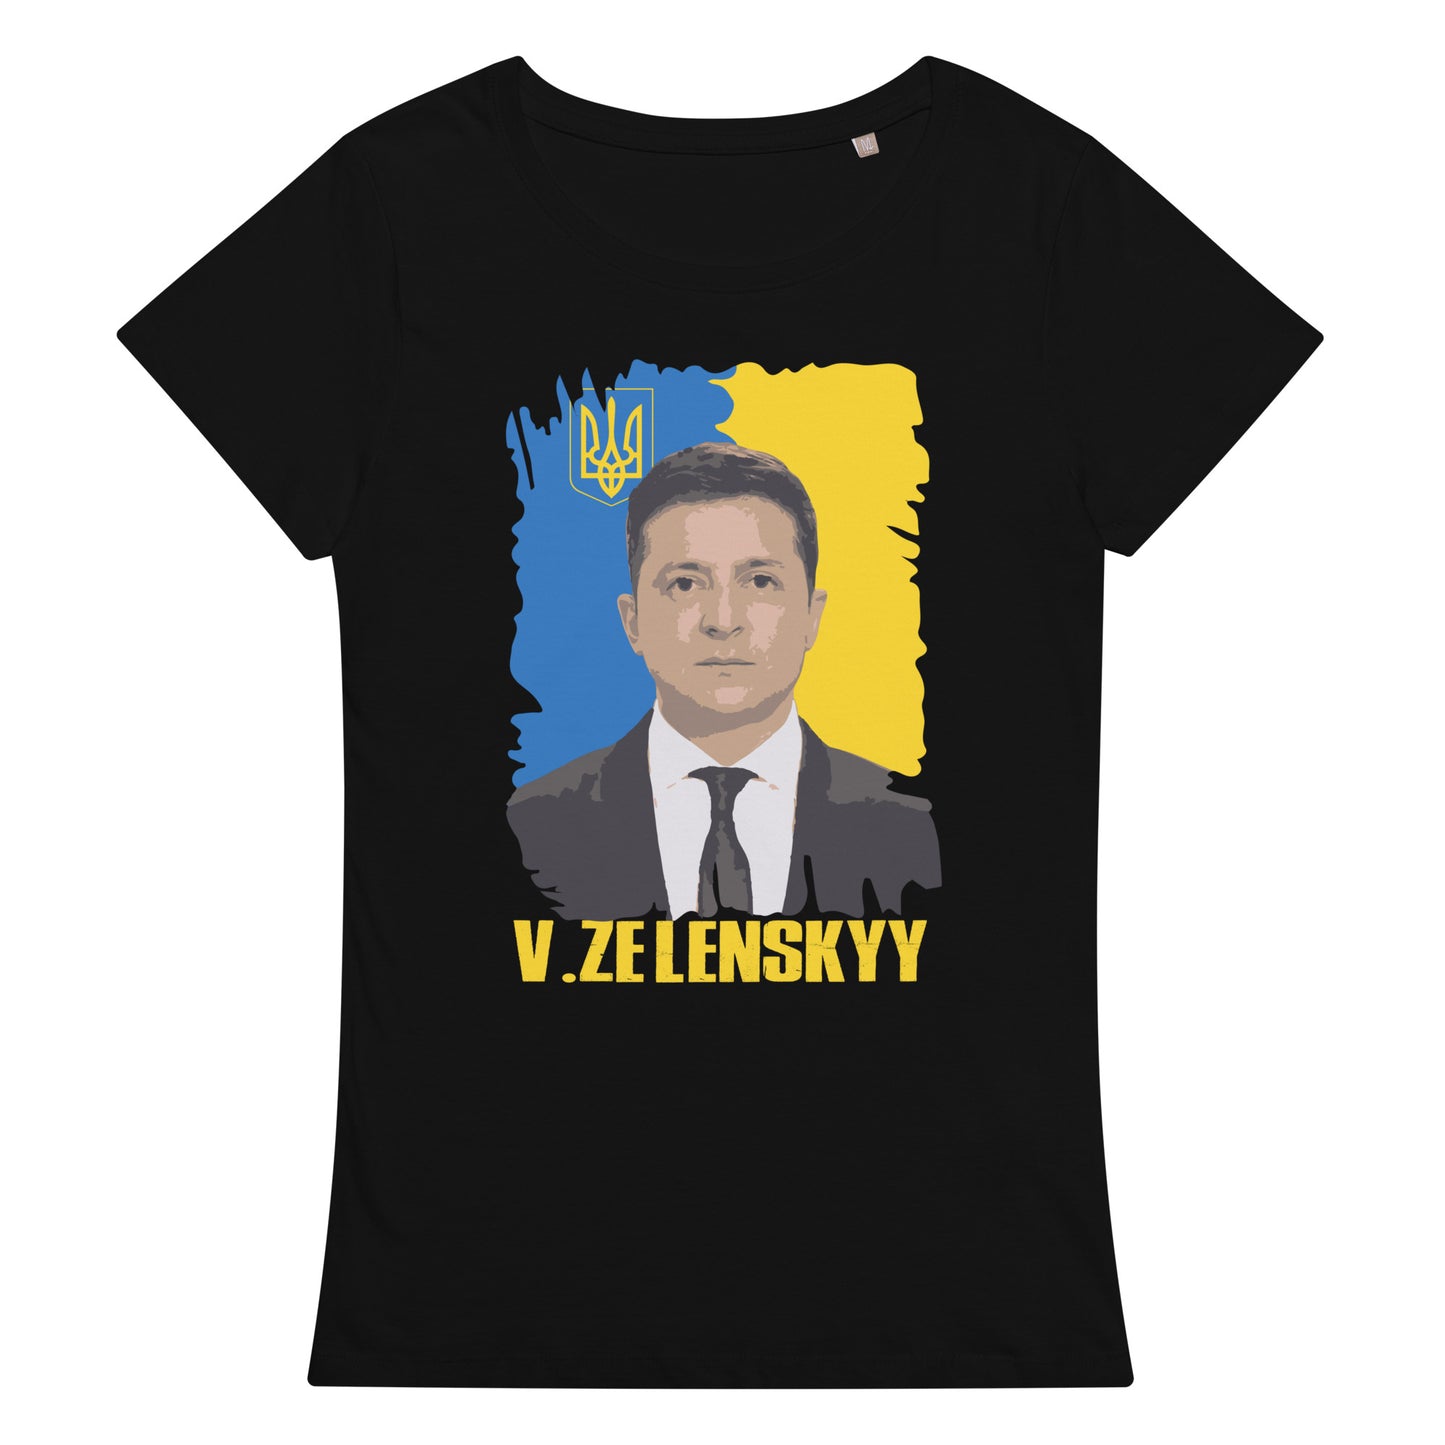 Women’s basic organic t-shirt | Volodymyr Zelenskyy P24